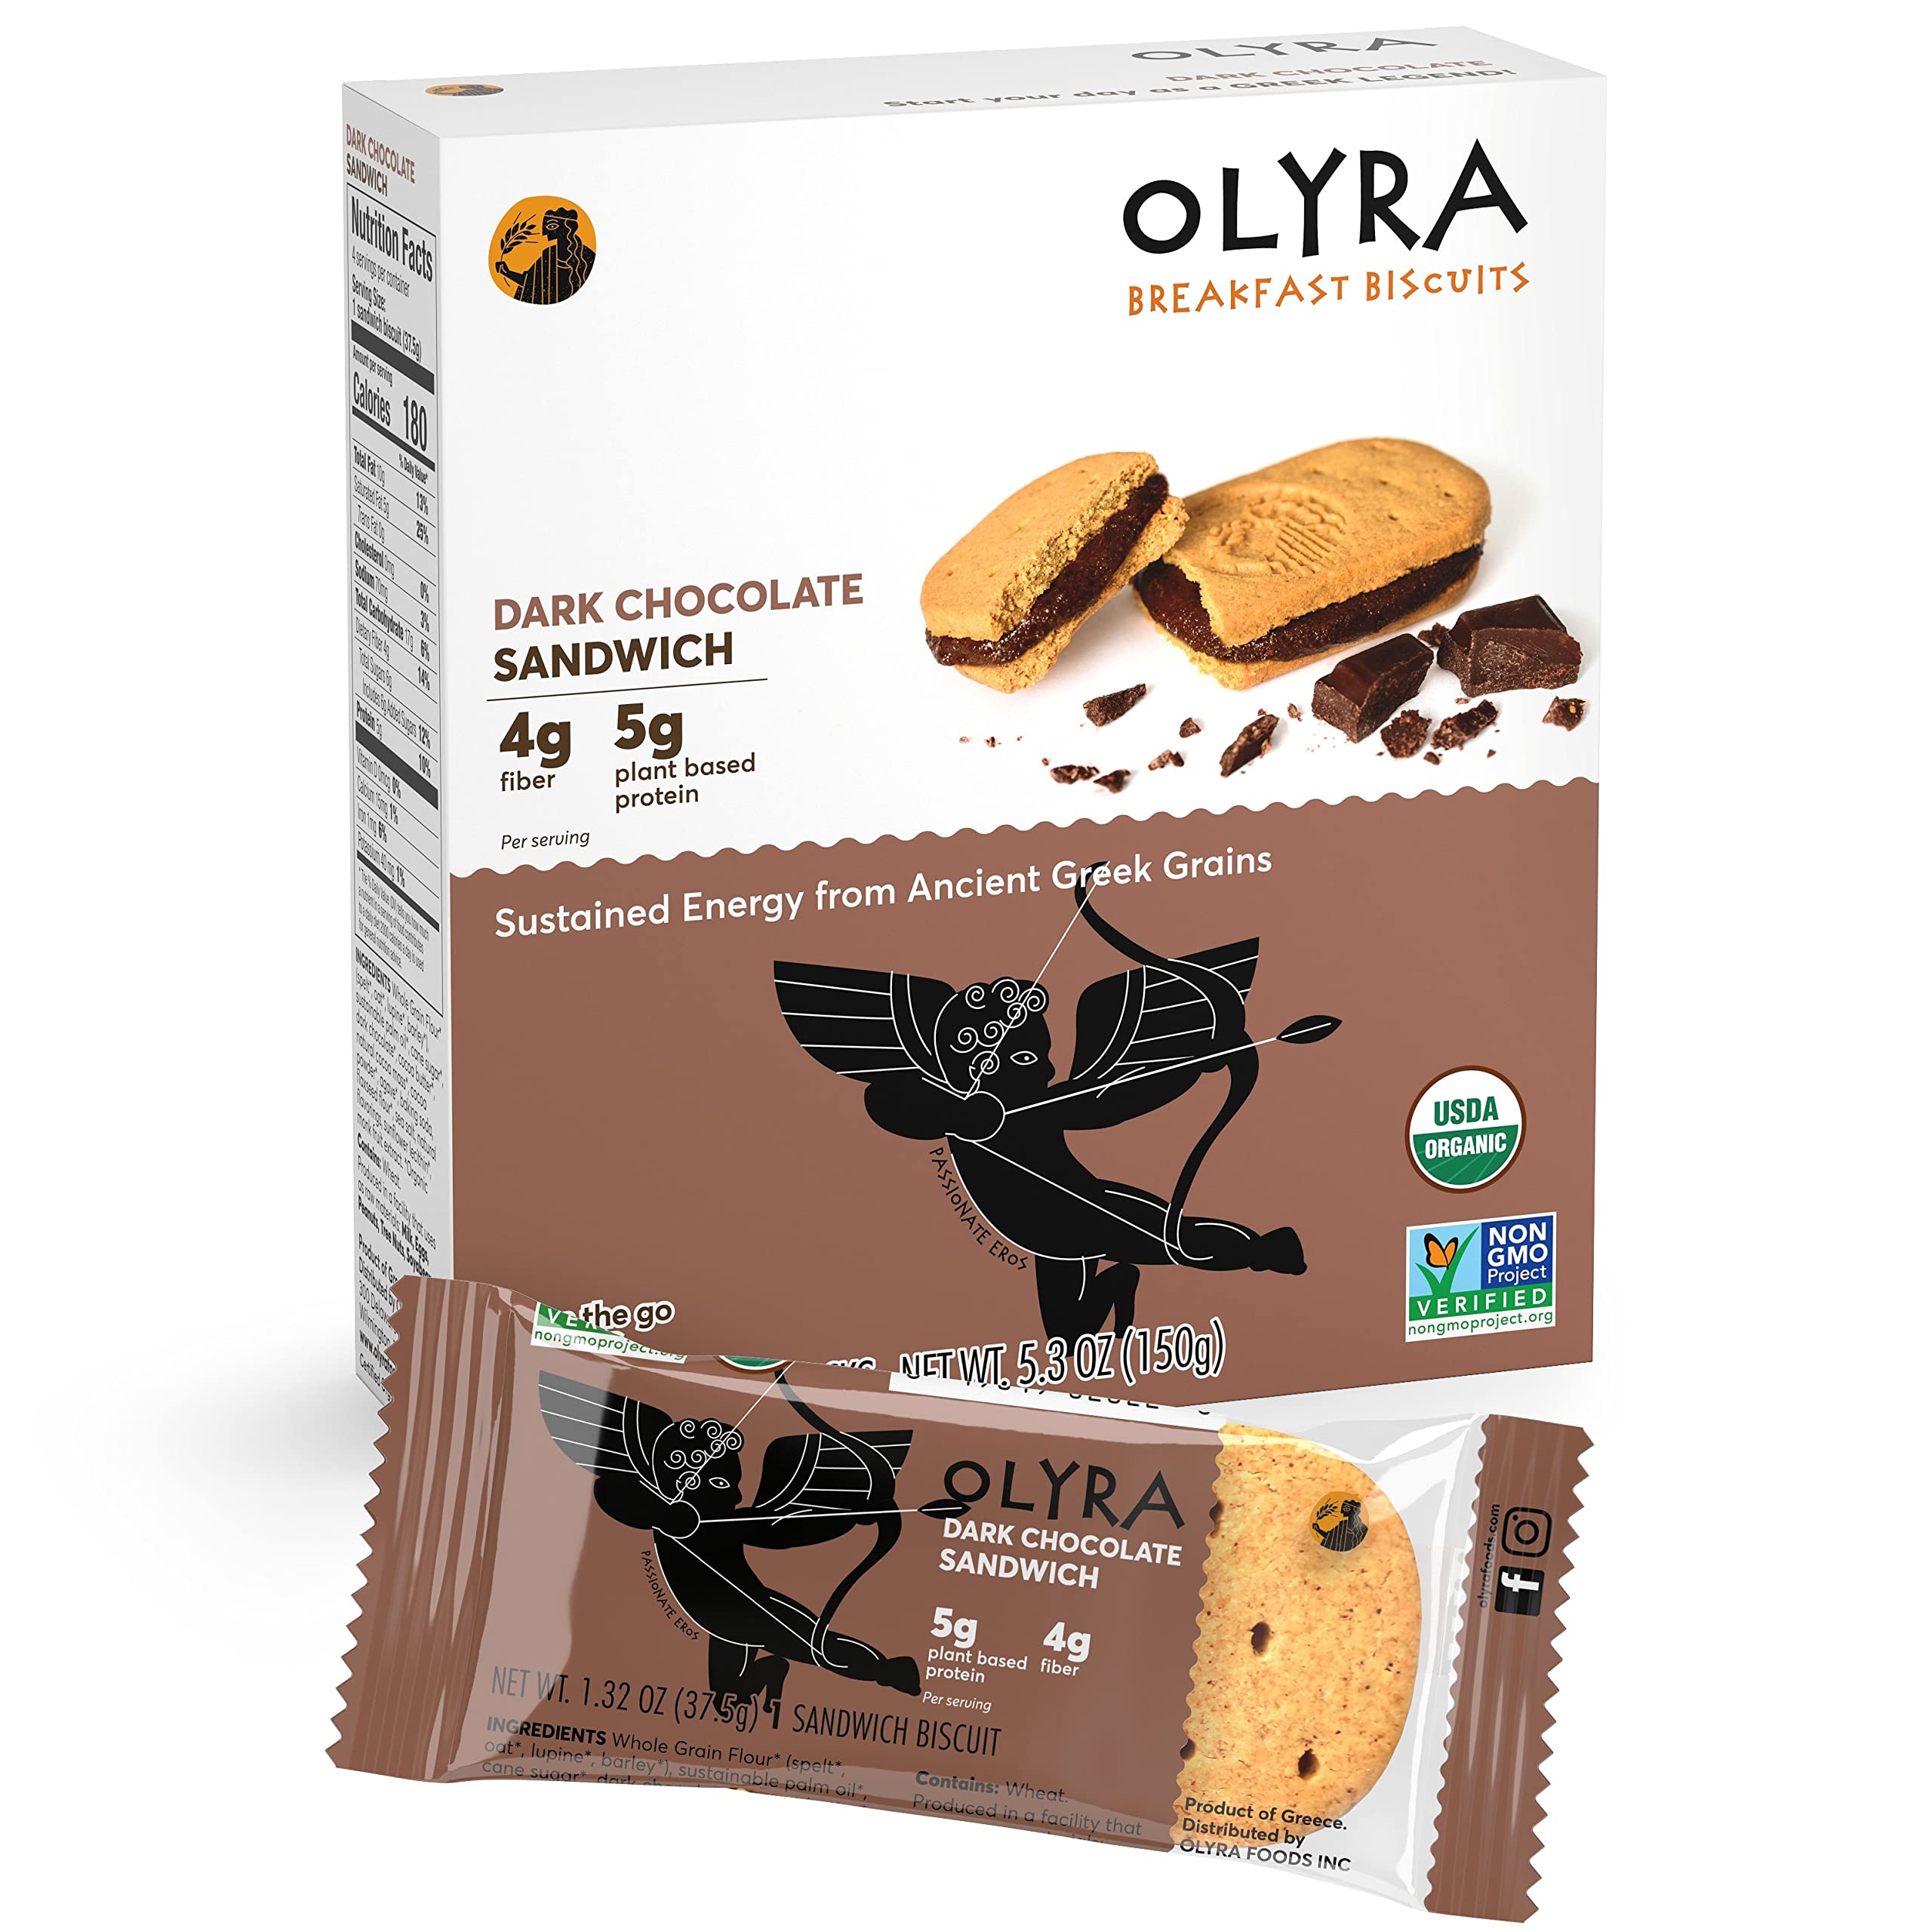 Olyra Organic Breakfast Biscuits Dark Chocolate | Healthy Snacks, Low Sugar, High Fiber, Plant Based Protein Cookies (1 Box of 4 Packs)